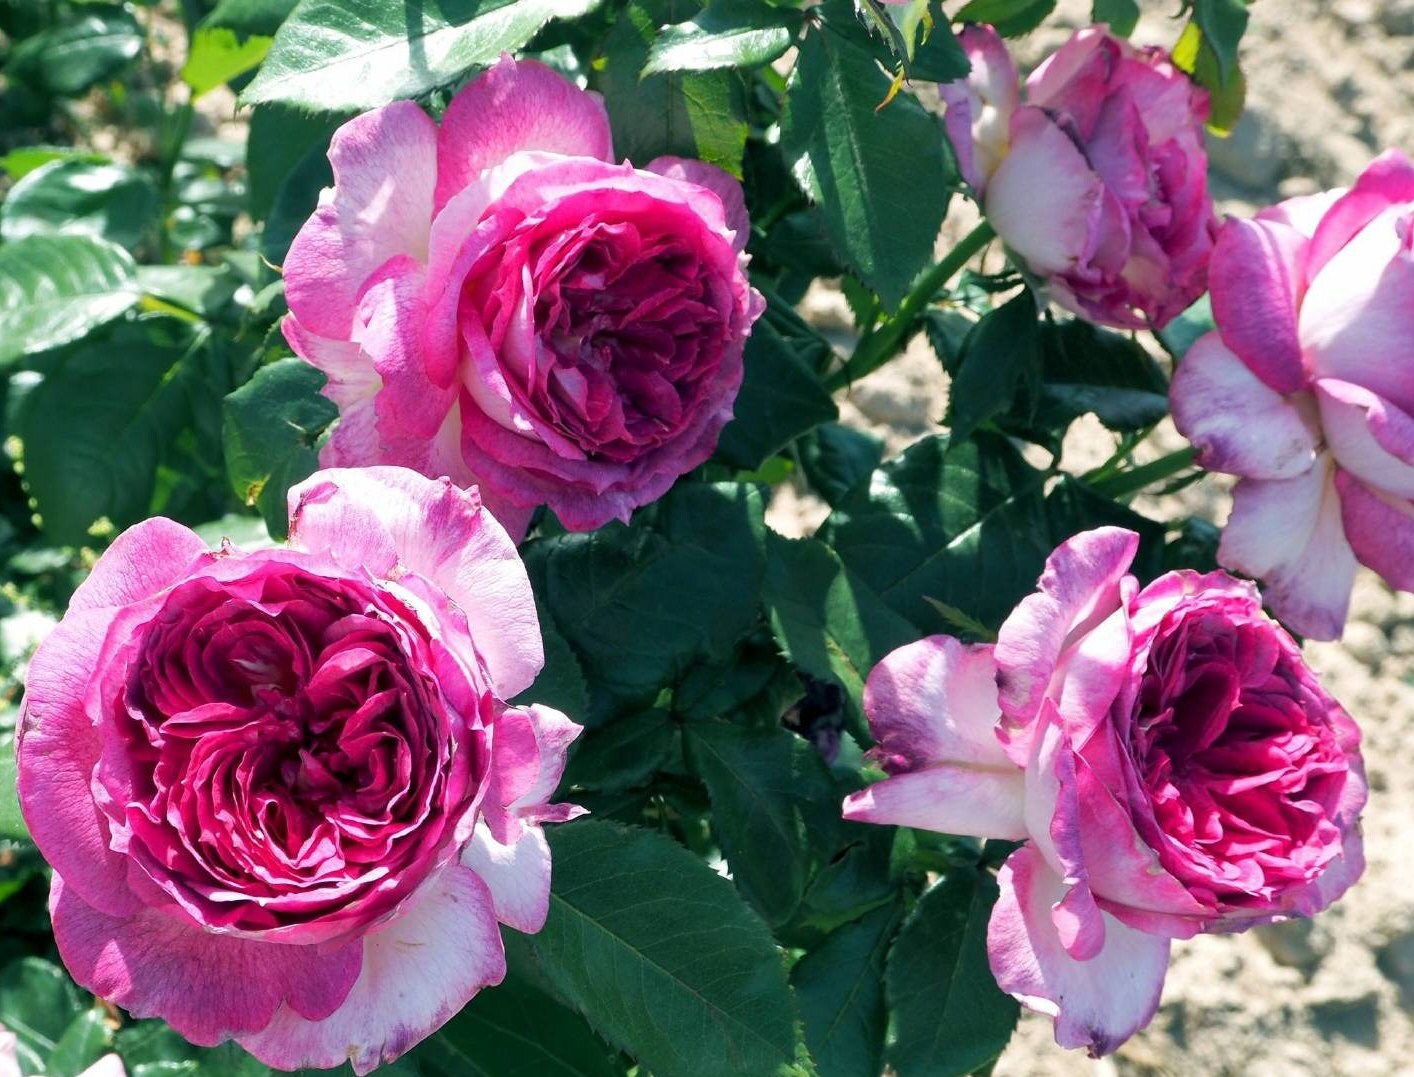 Rose 'Thierry Marx' (蓝莓蛋糕) (1 Gal+ Live Plant) Shrub Rose